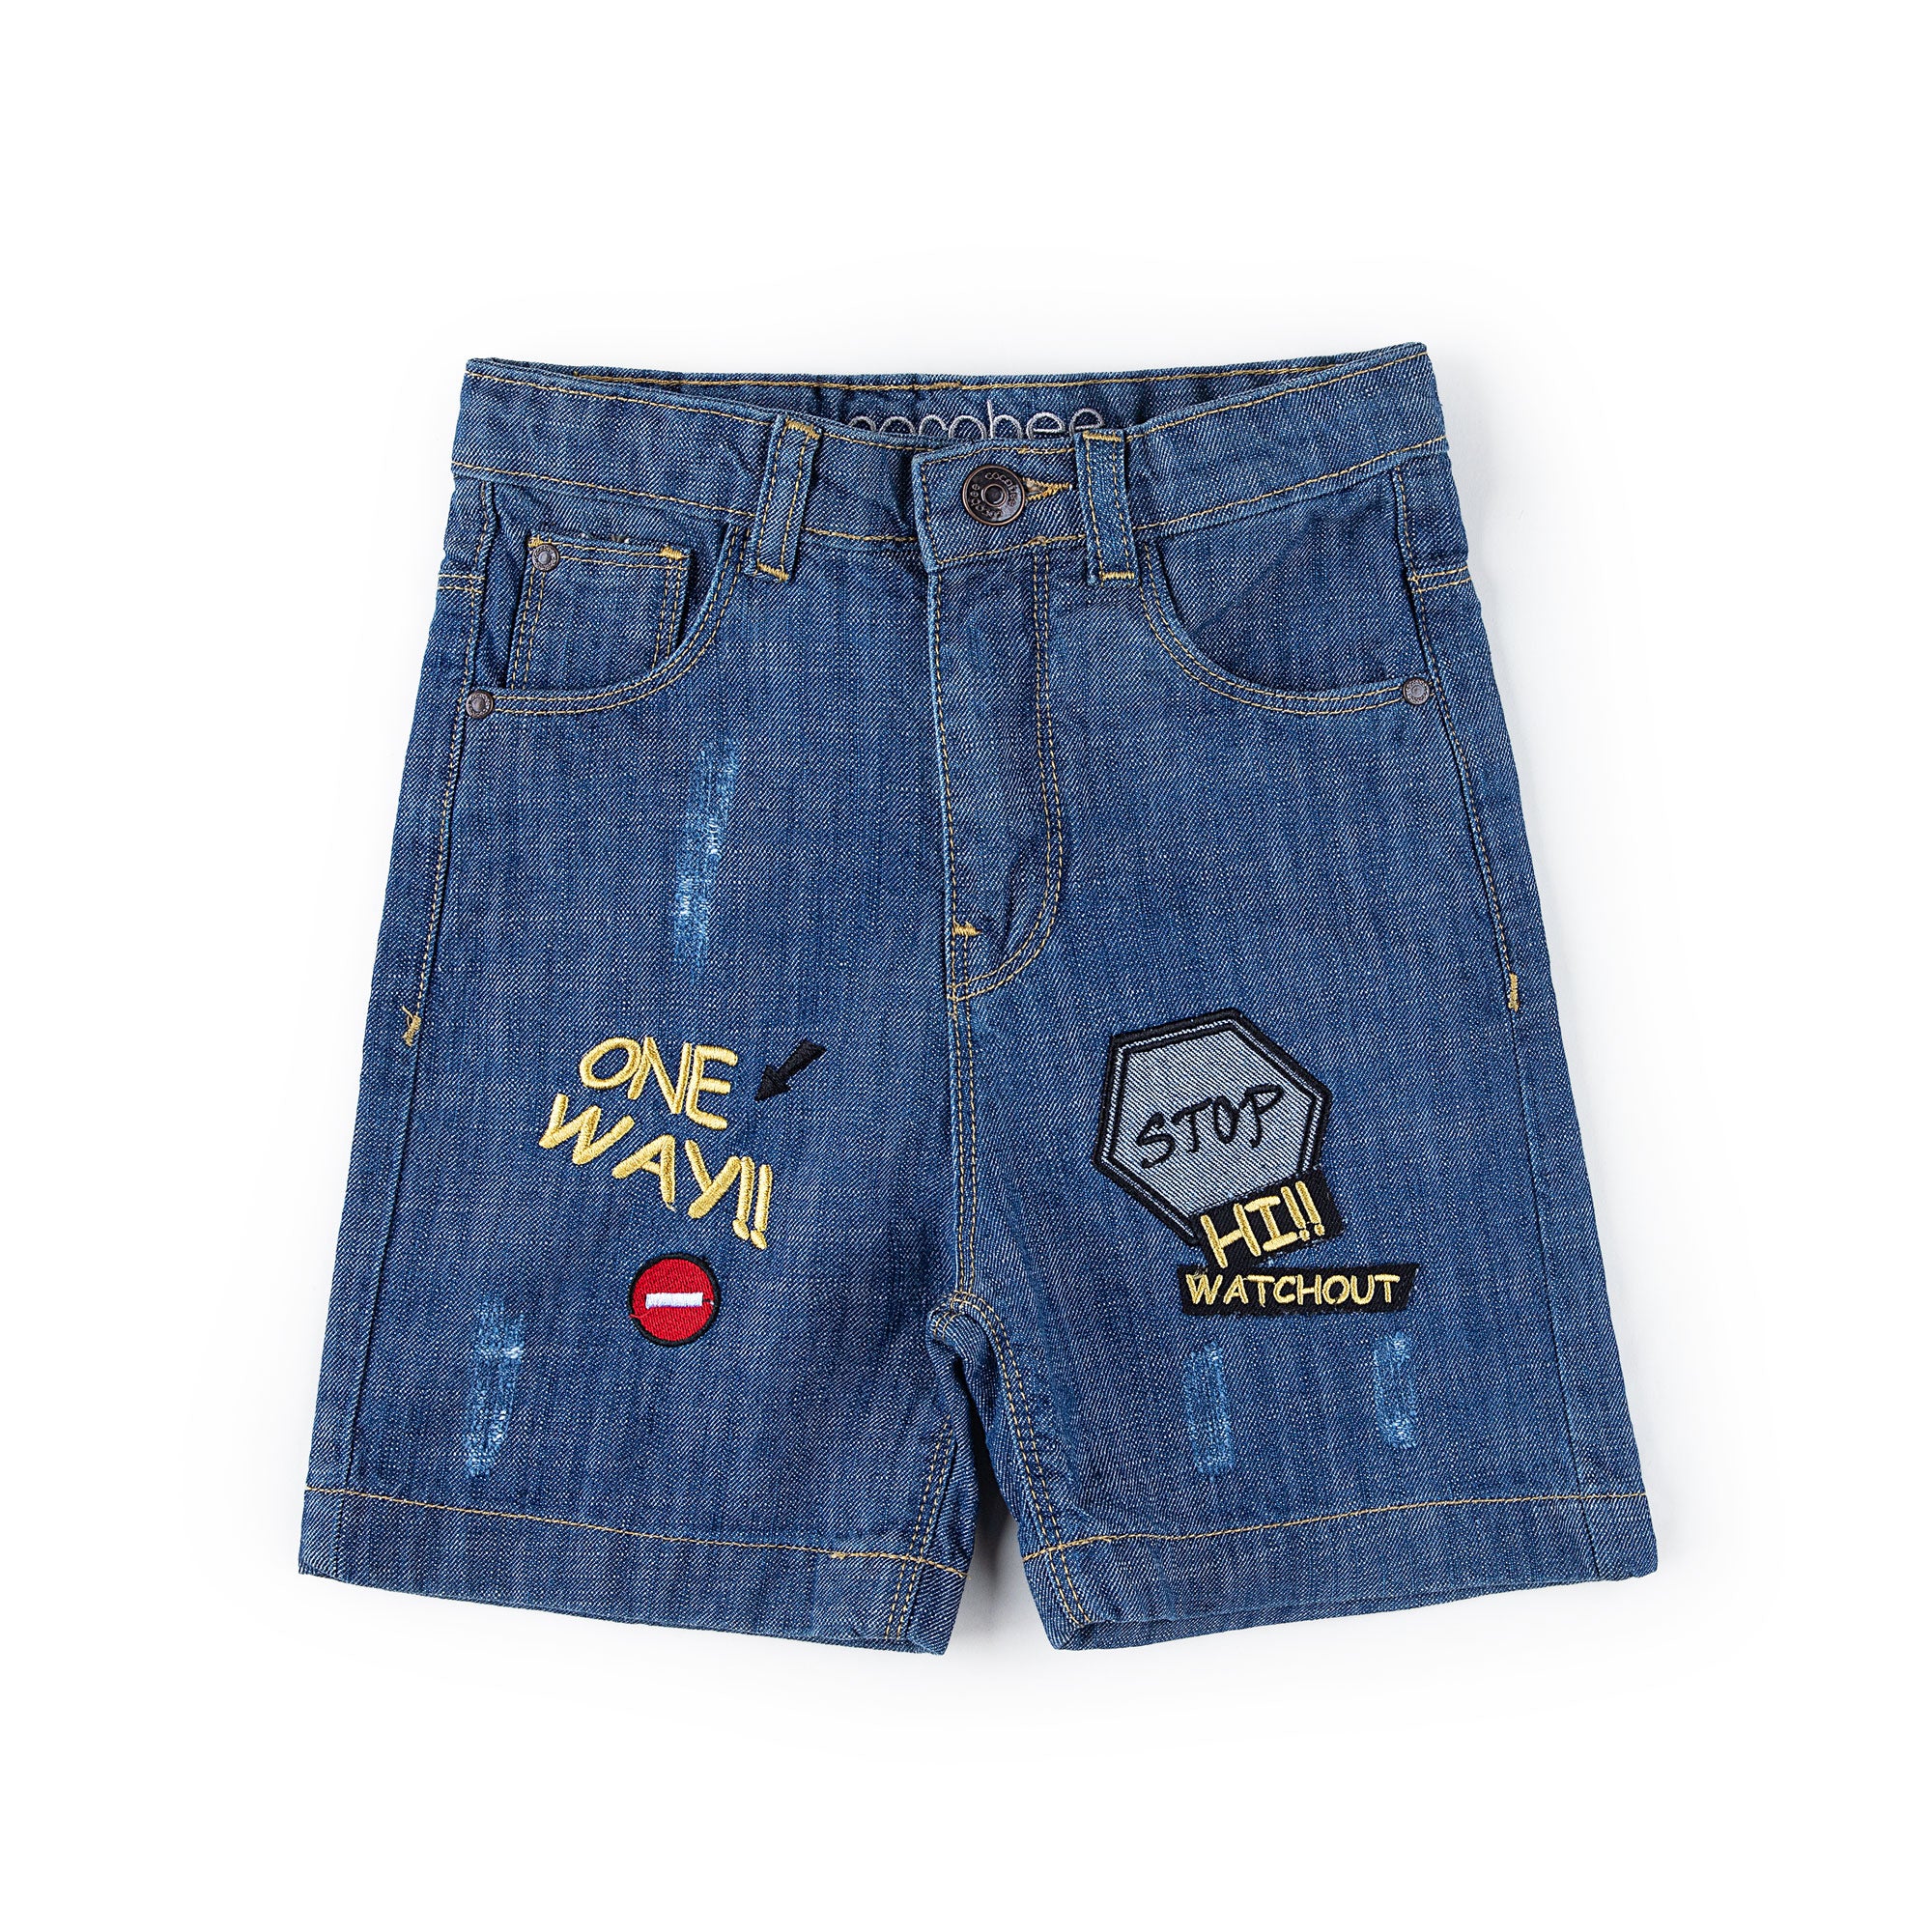 Embroidered denim shorts